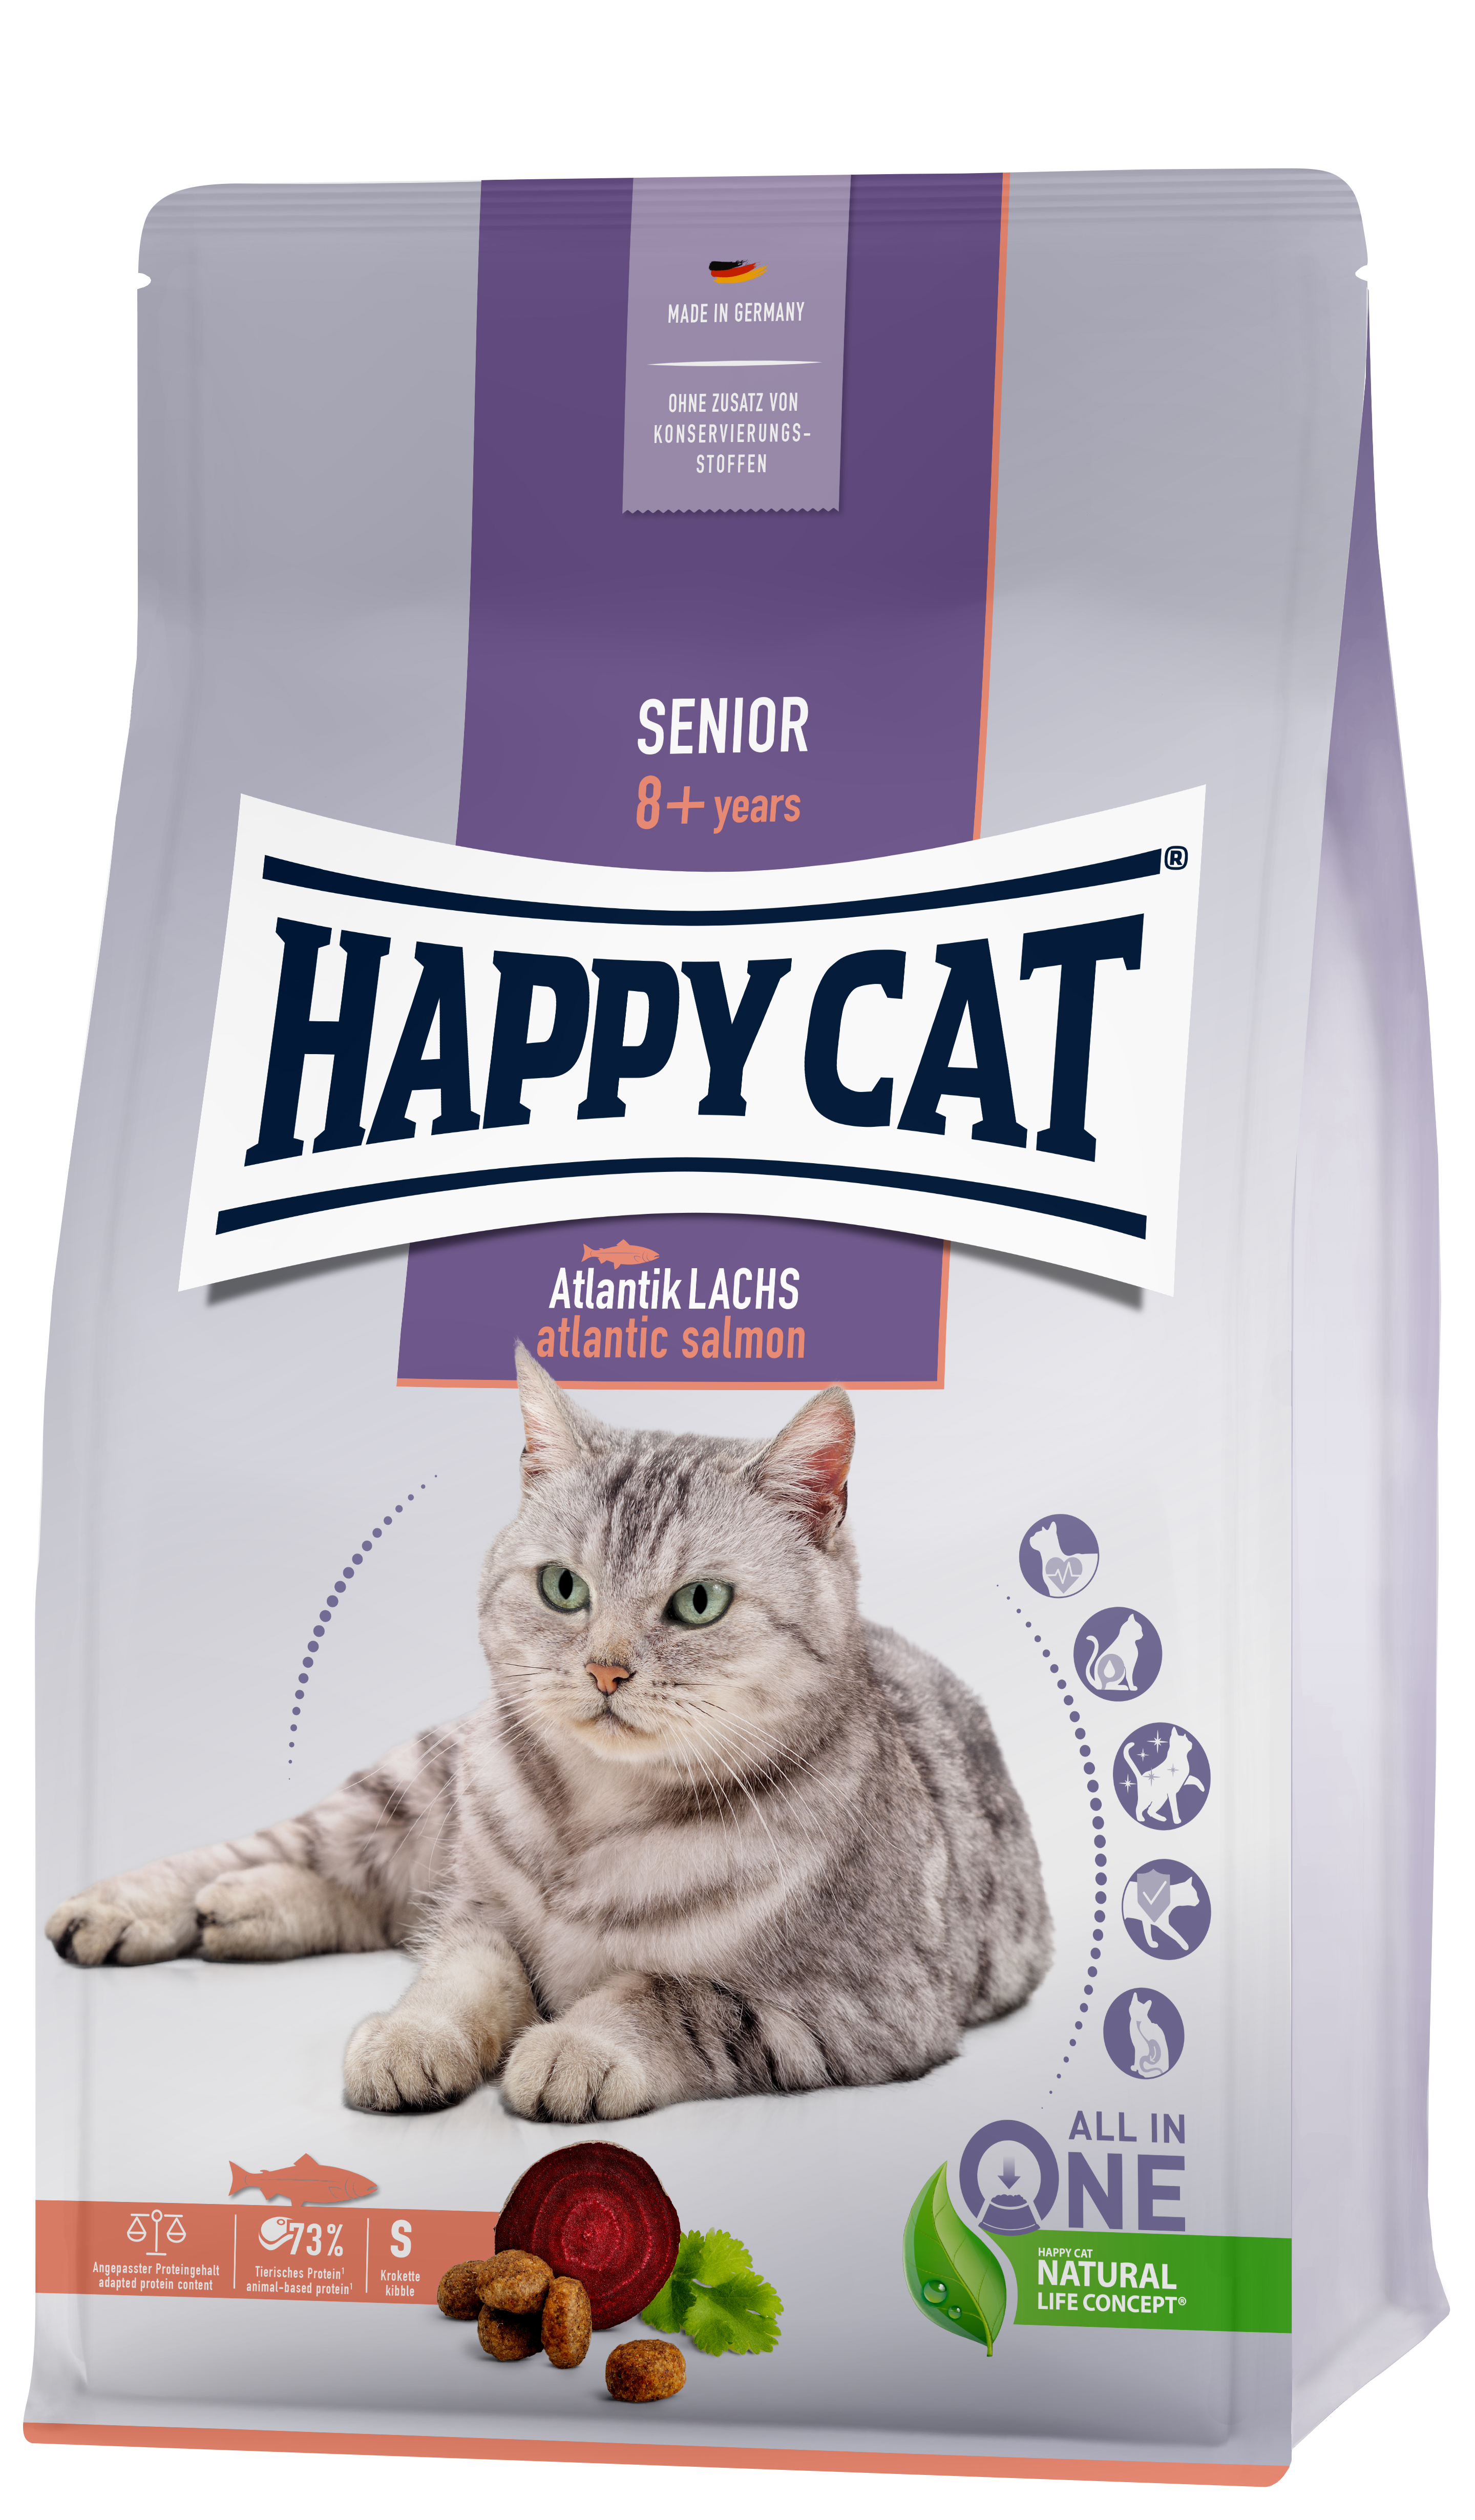 Happy Cat Senior Atlantik Lachs 1,3 kg